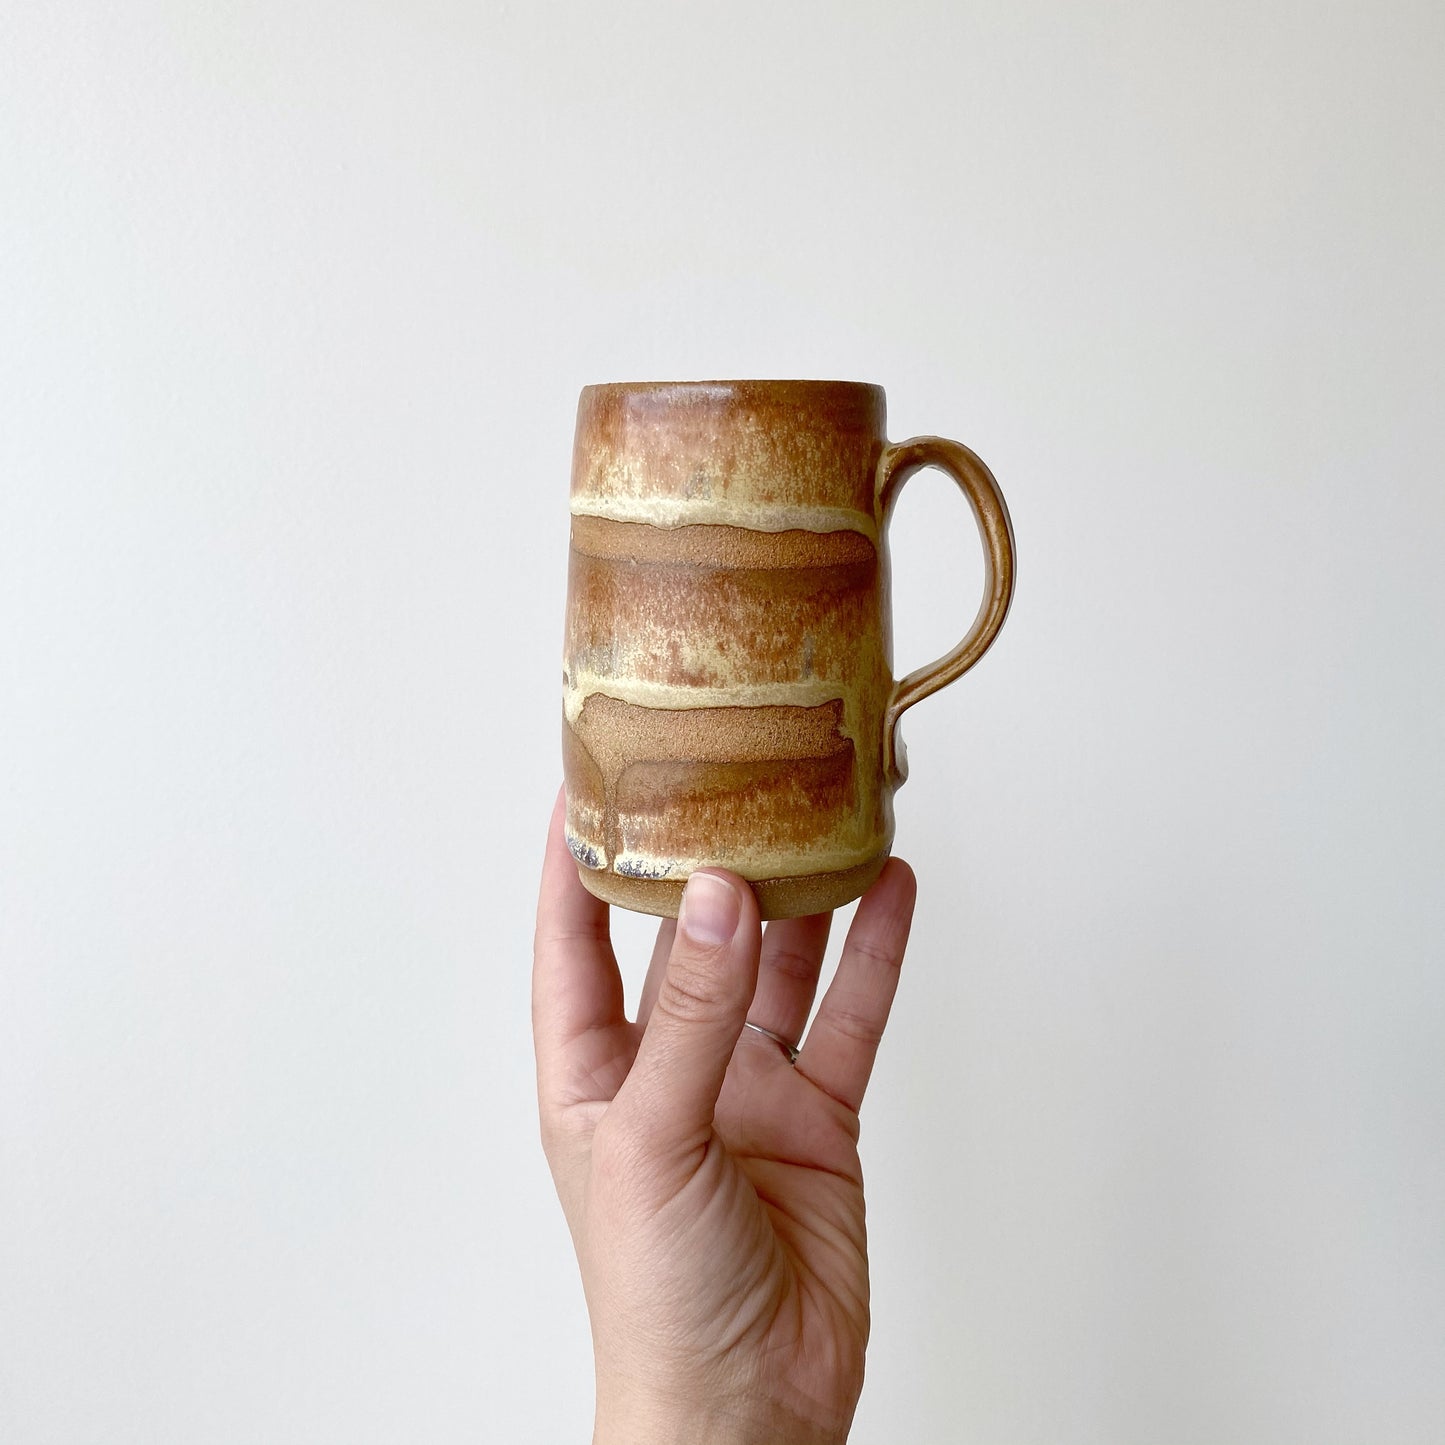 Handcrafted Pottery Mug, Desert Sand